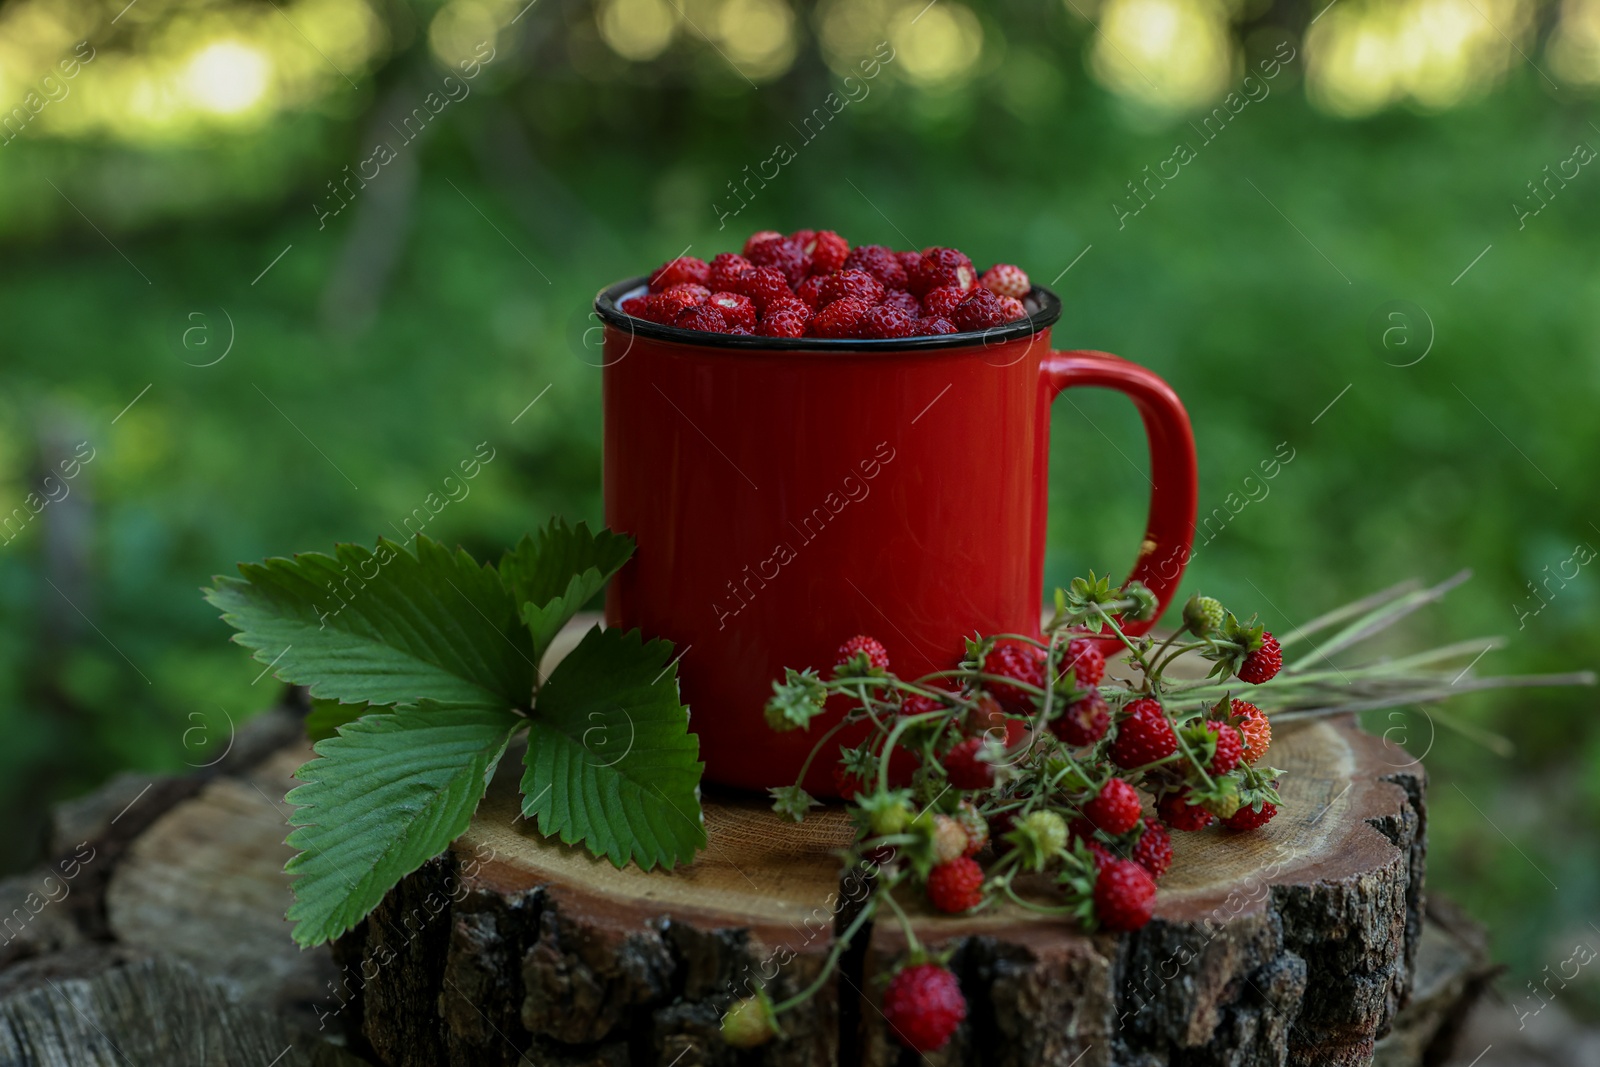 Photo of Mug, tasty wild strawberries and green leaves on stump against blurred background